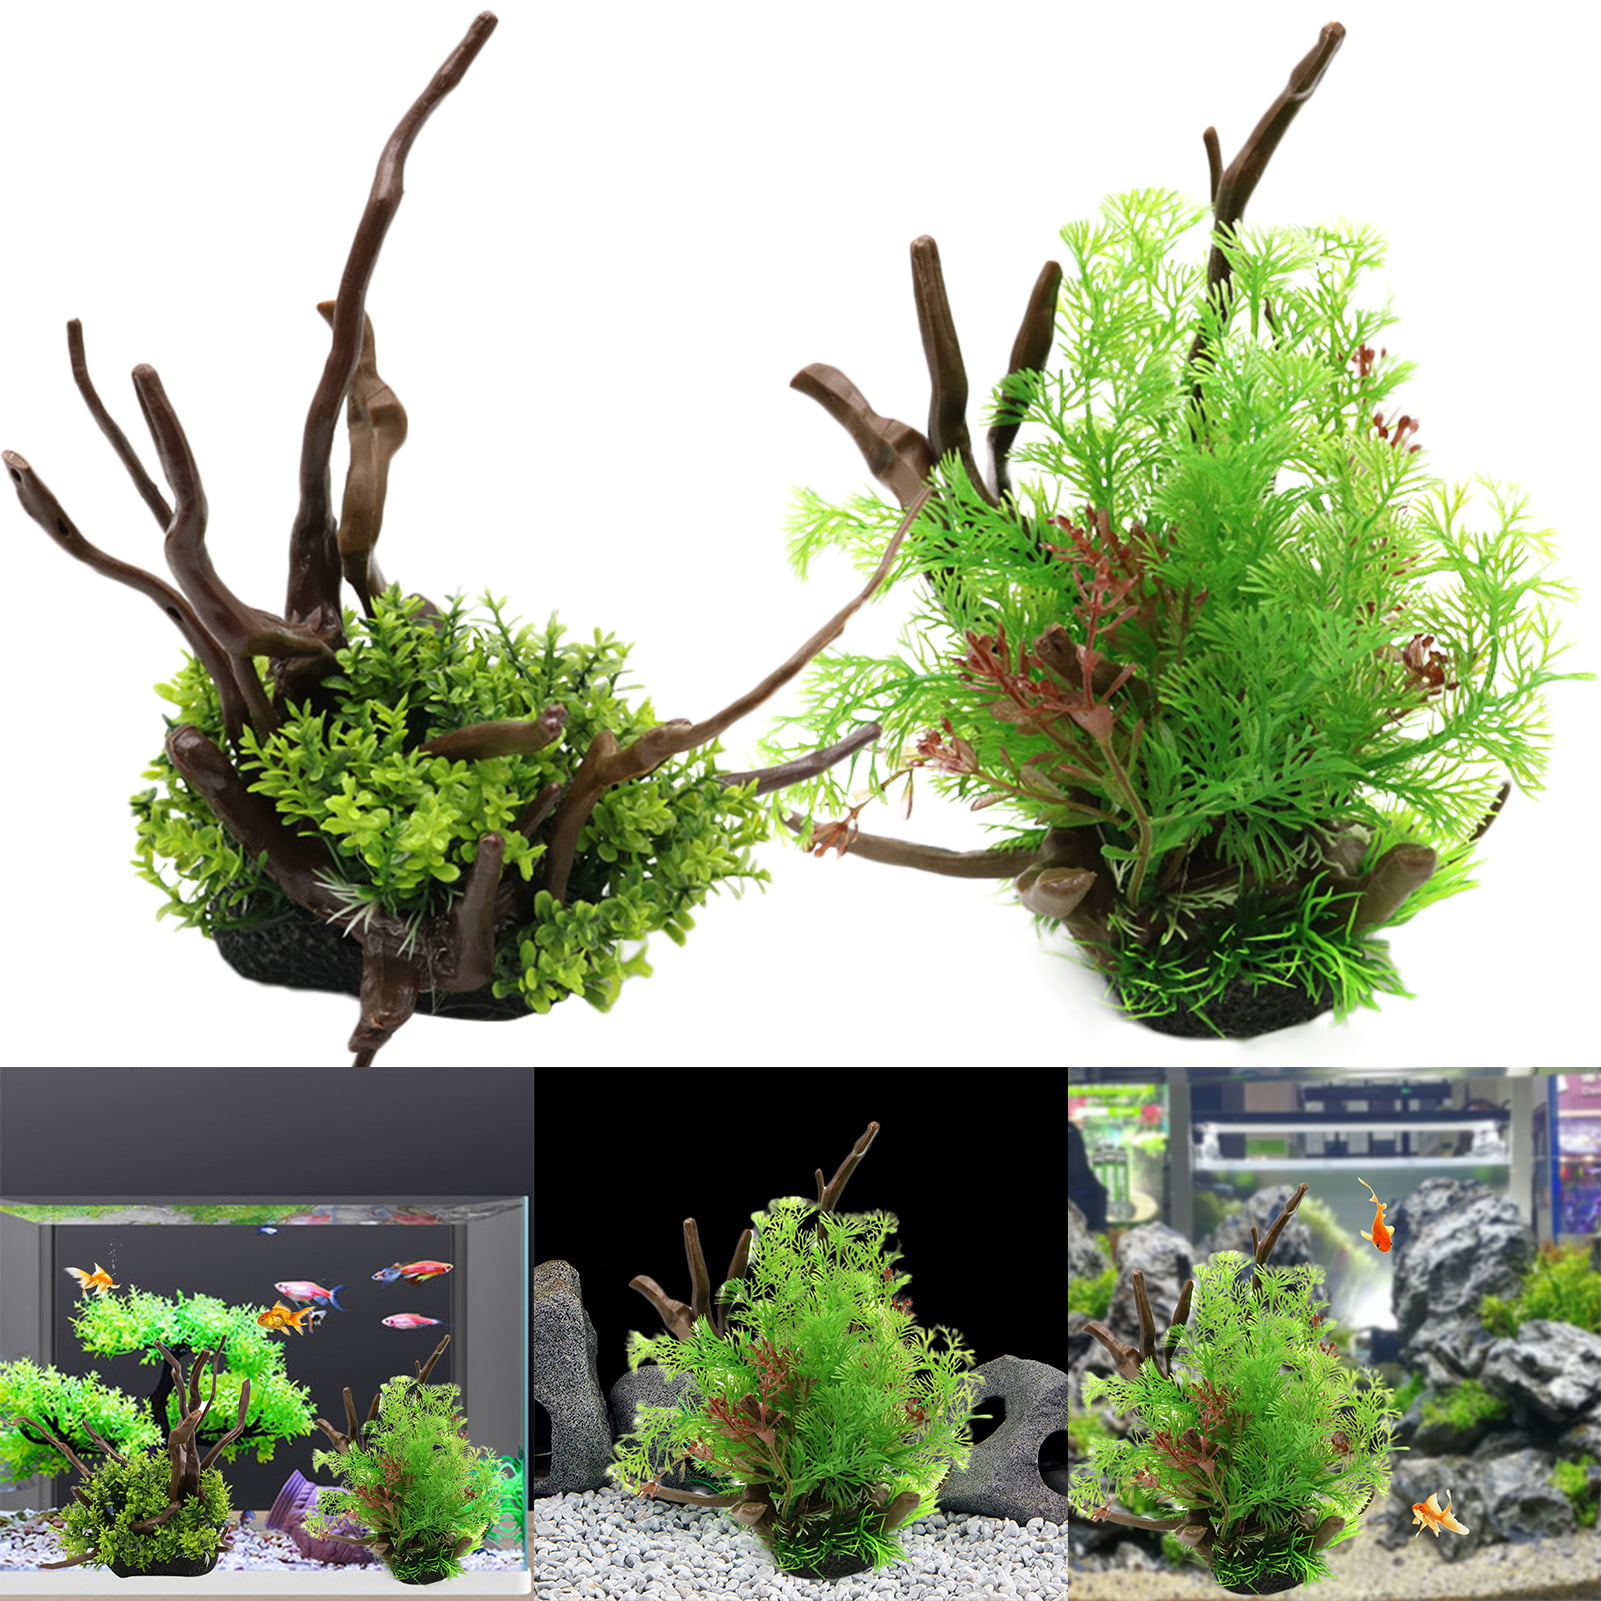 Deyuer Water Plants Artificial Aquariums Decoration Plastic Fake